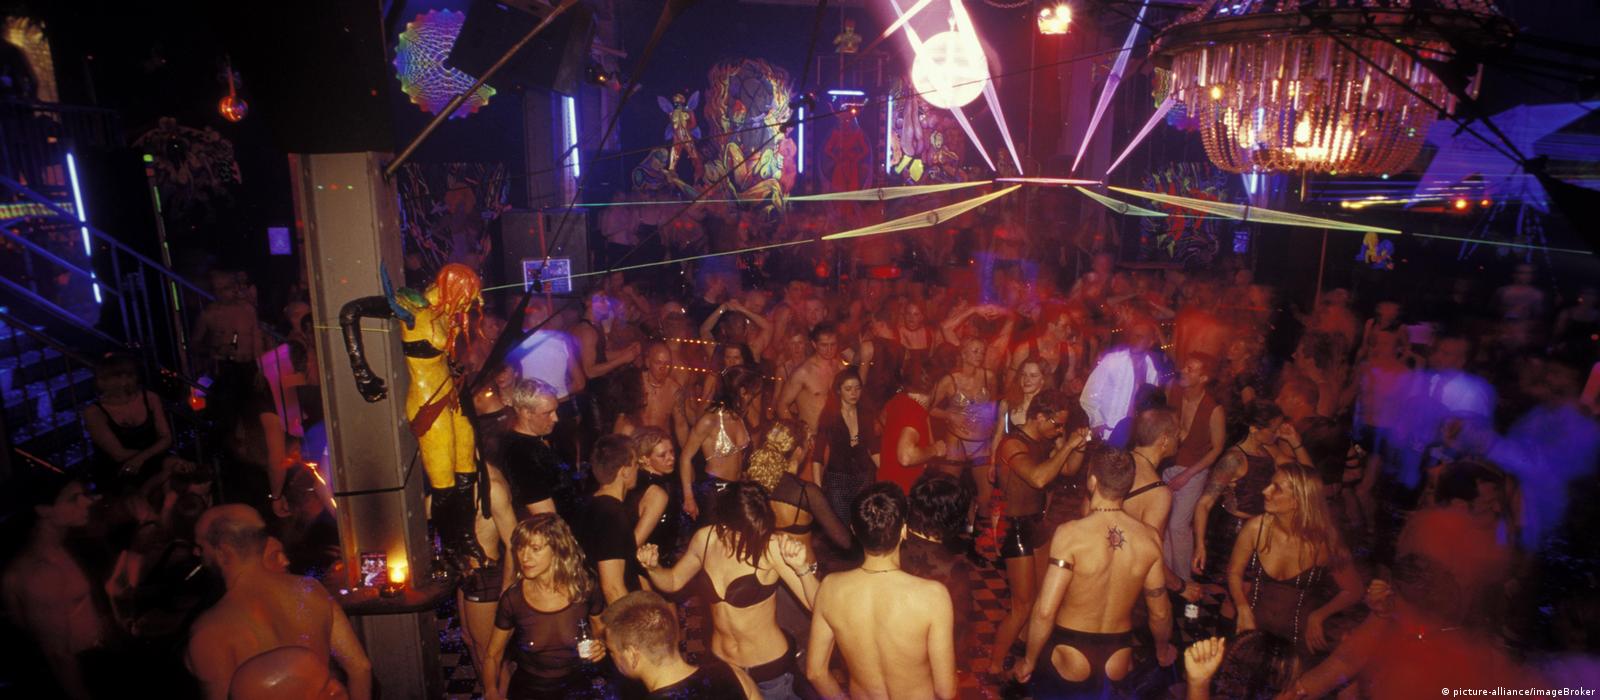 Infamous Berlin sex club faces closure – DW